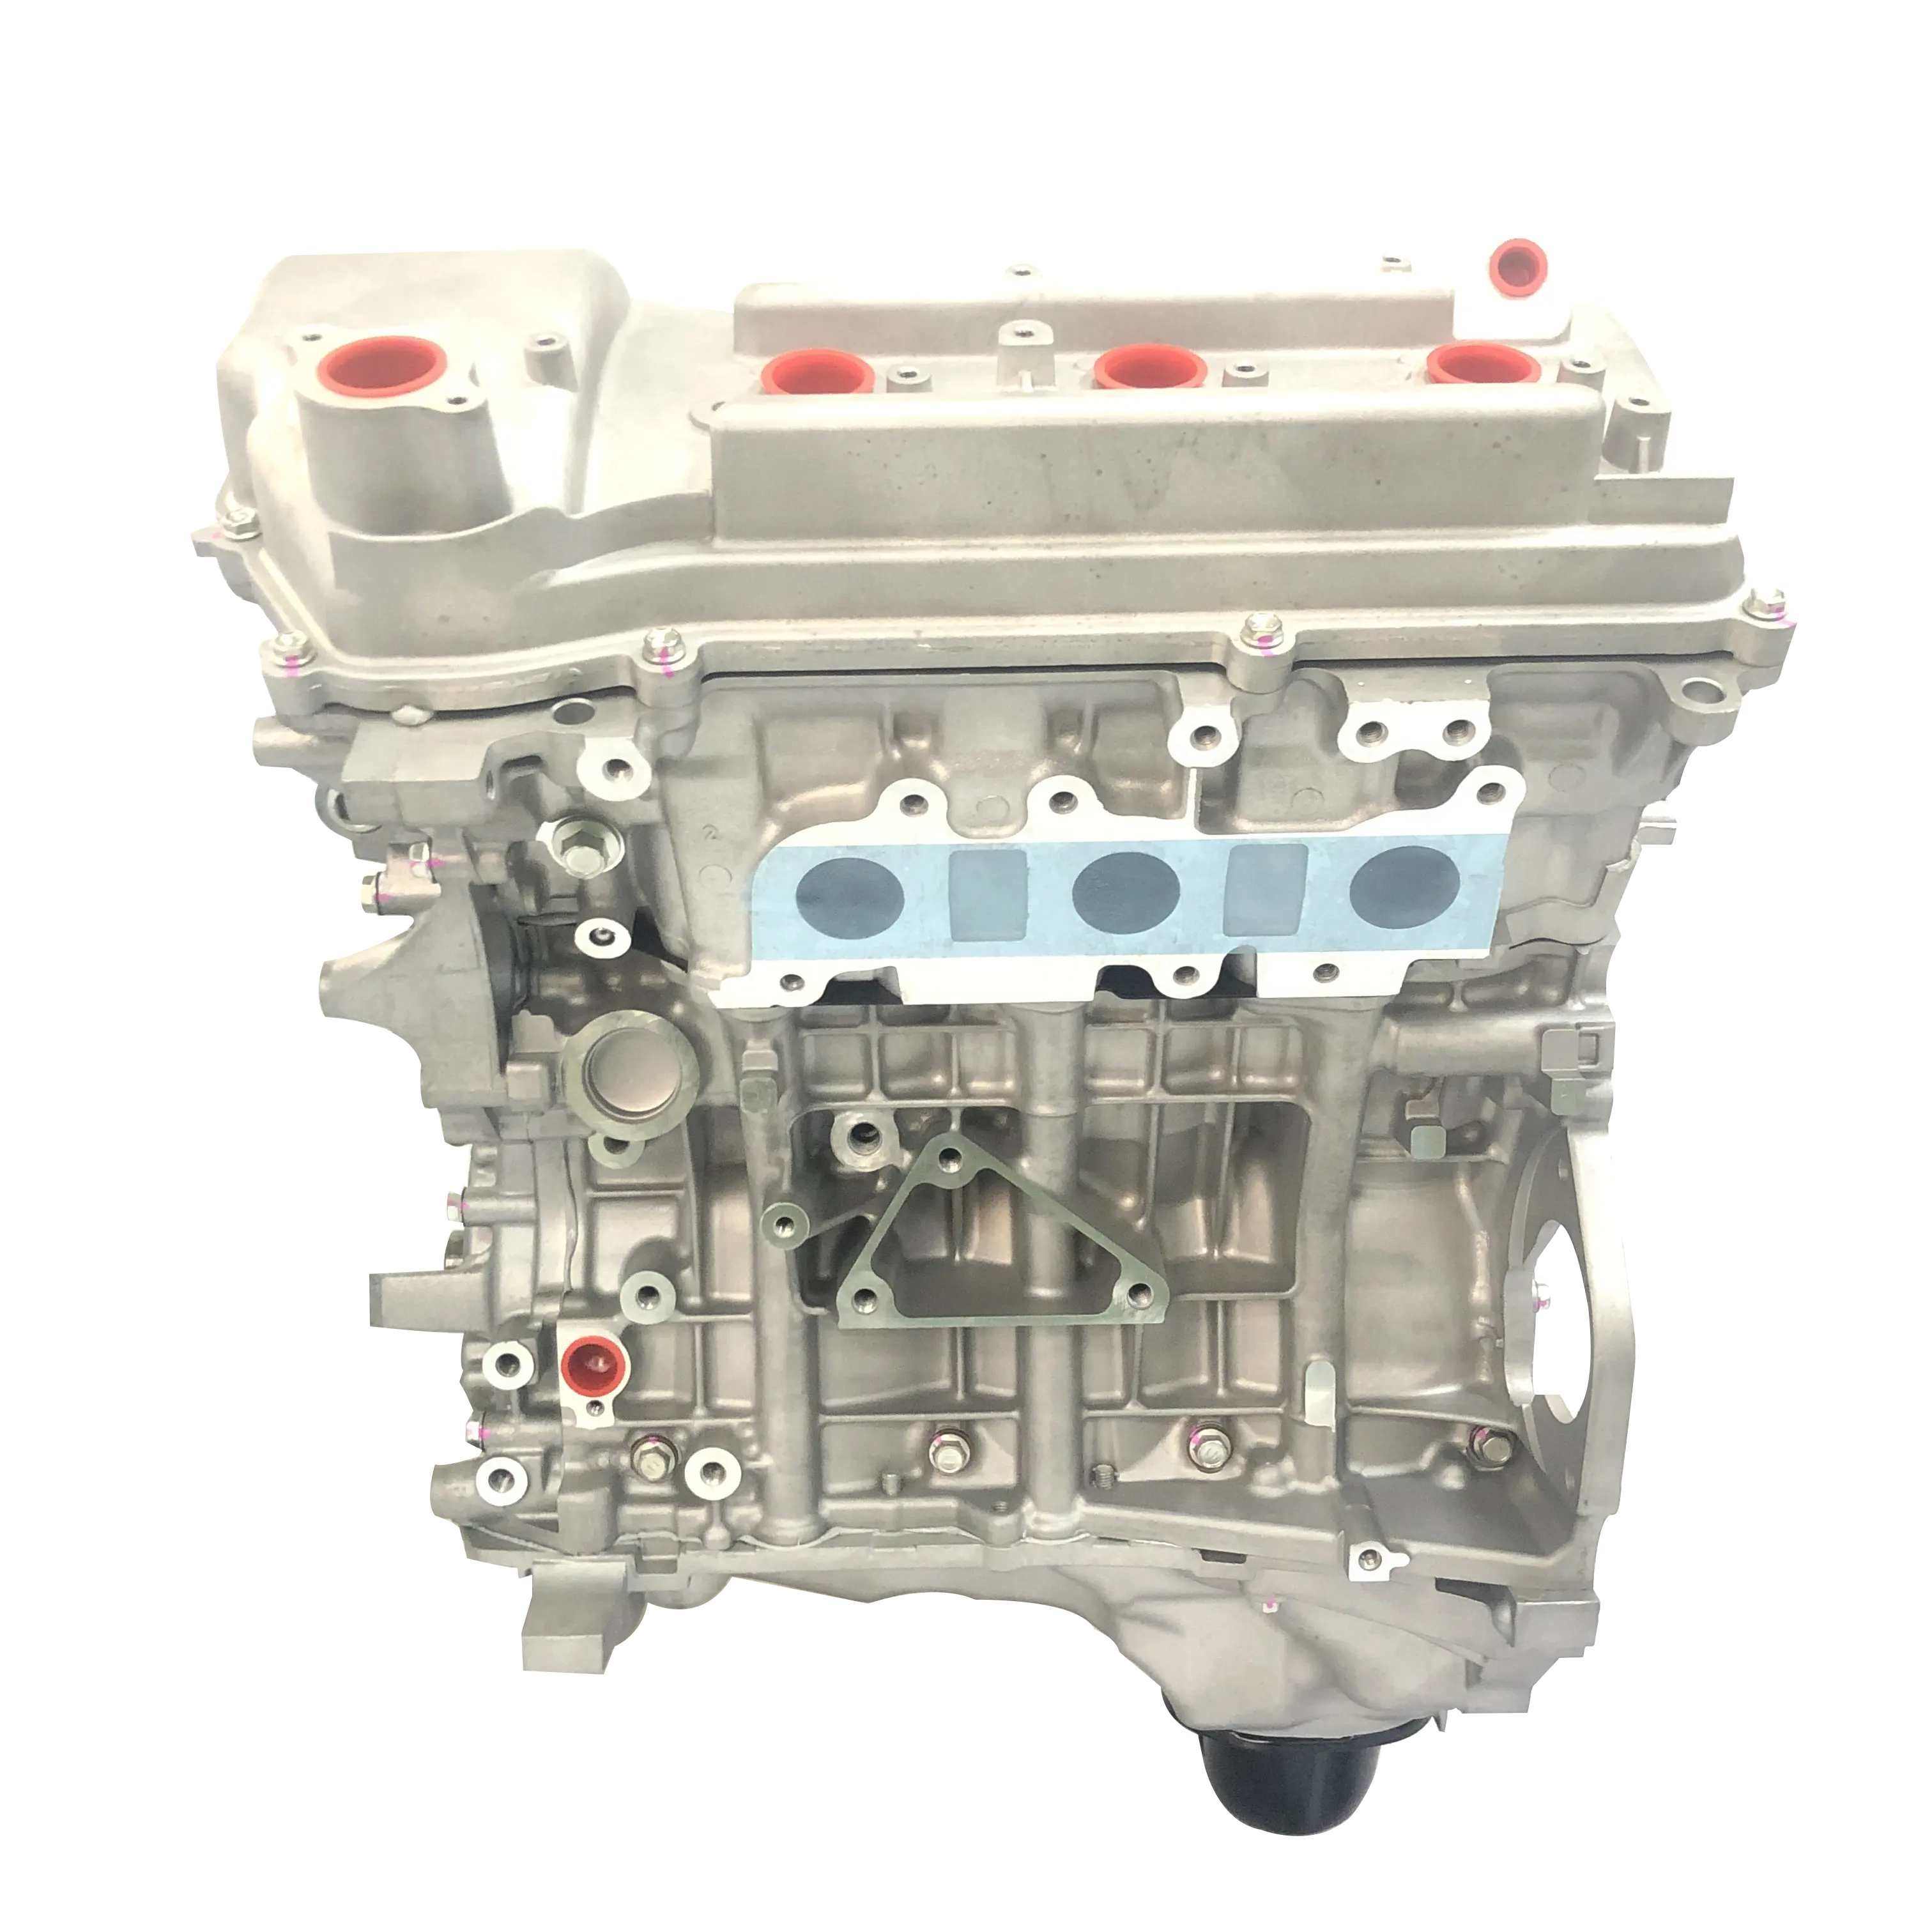 Hochwertiger Newpars Großhandels motor für Toyota für Land Cruiser V6 4.0L 1GR Motor baugruppe